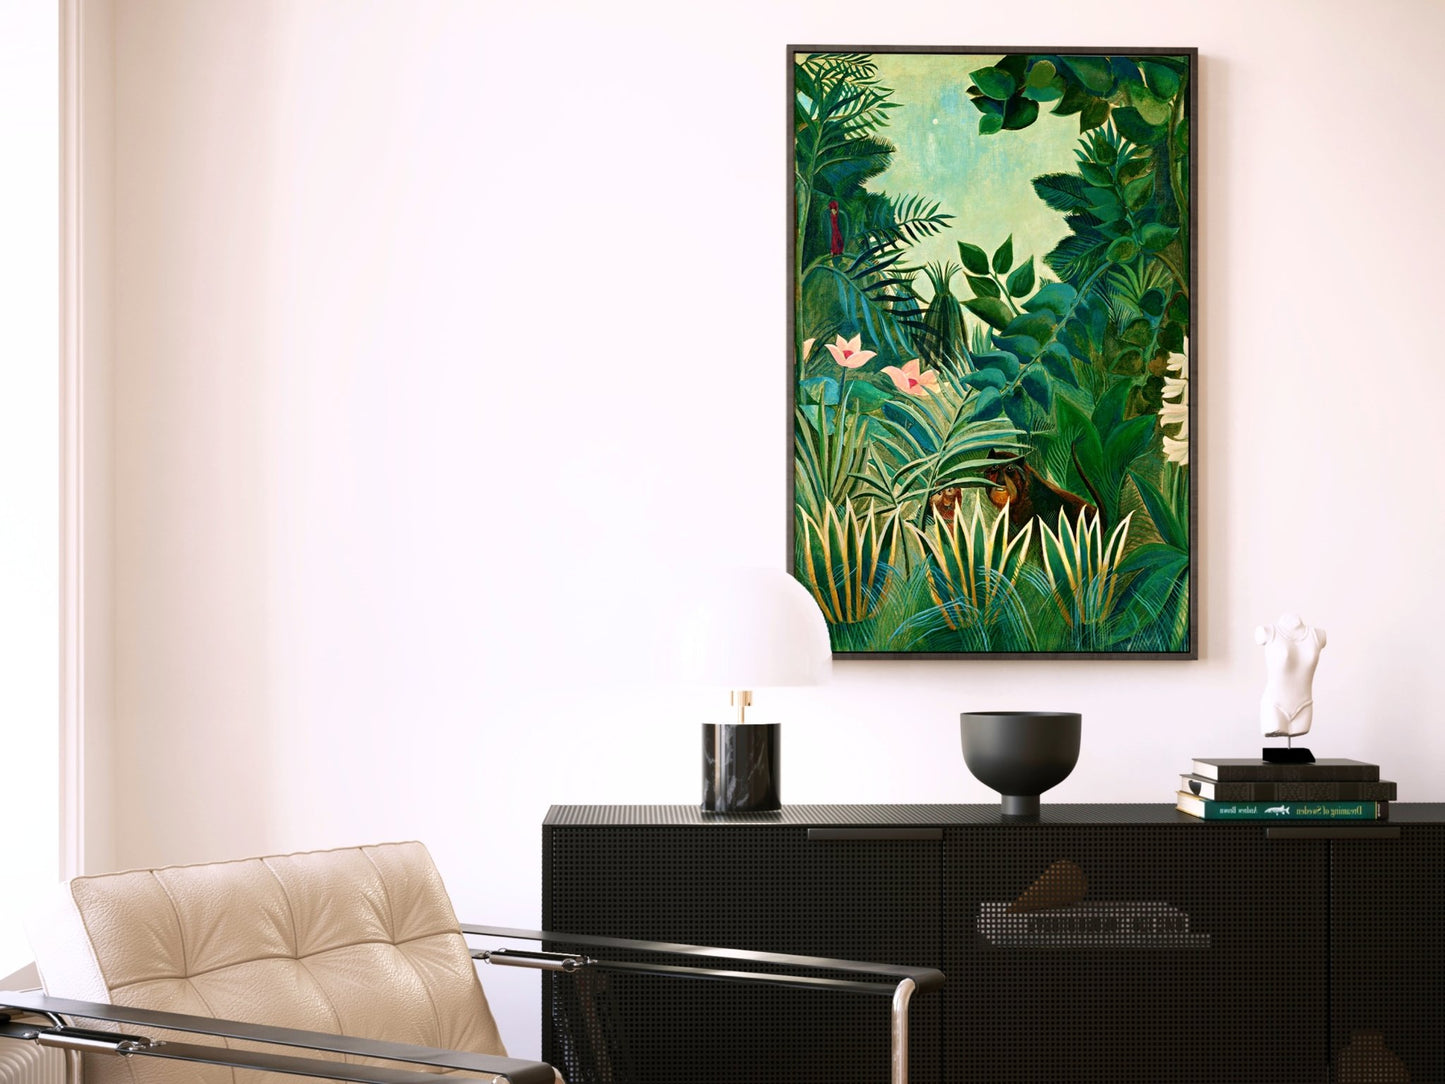 The Equatorial Jungle Framed Canvas - AureousHome